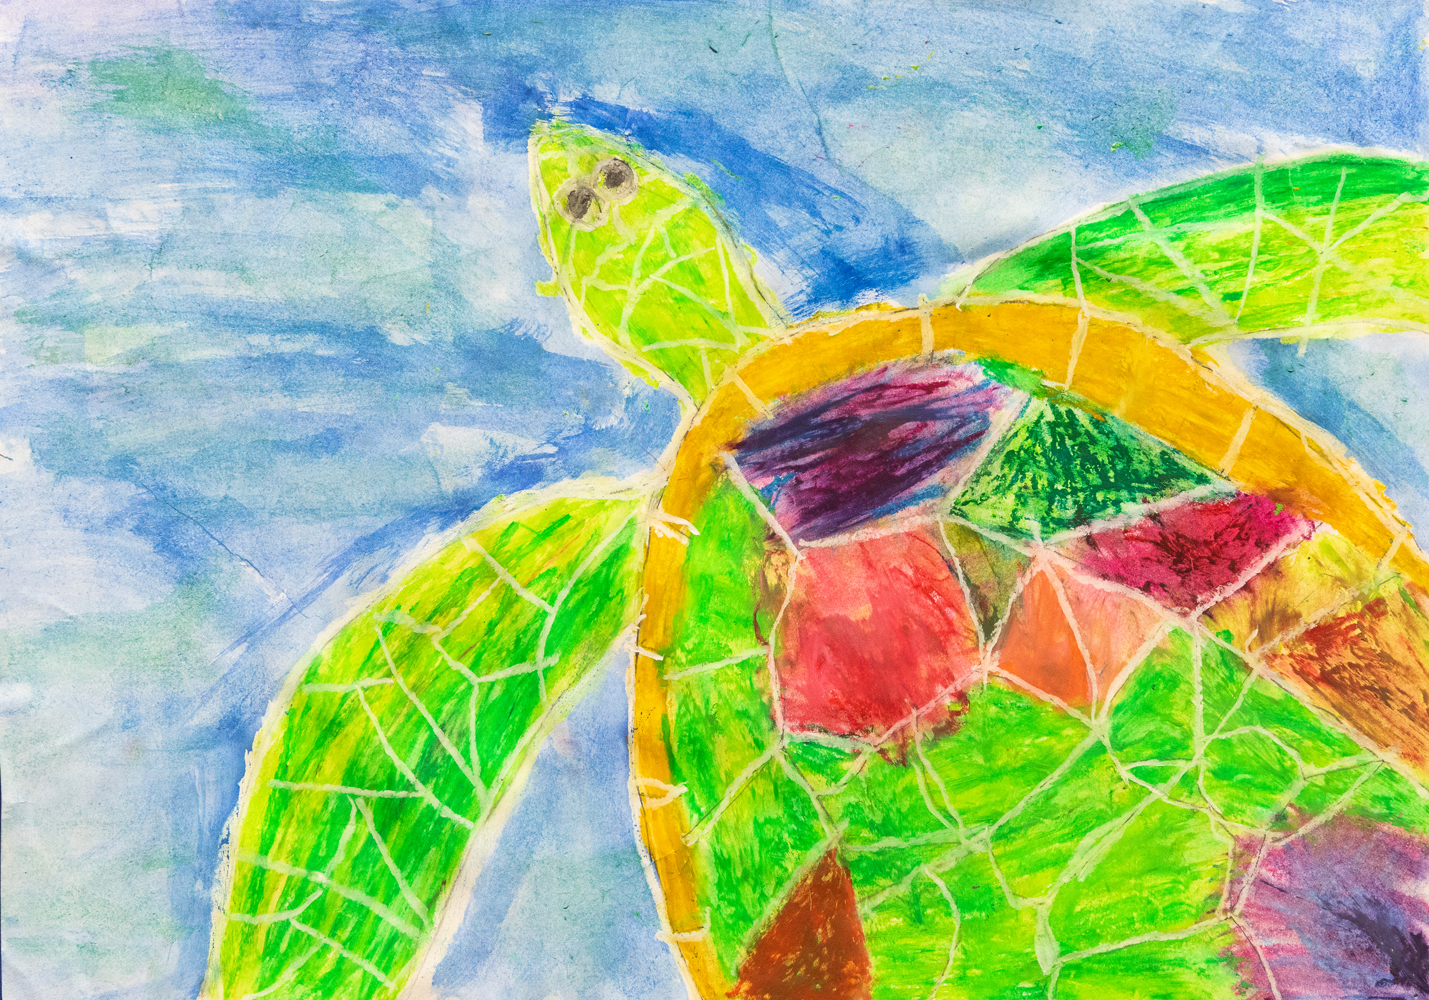 16. Atalia Seymour, 'Turtle', crayon, watercolour, Year 3, St Mary's Primary School, Armidale